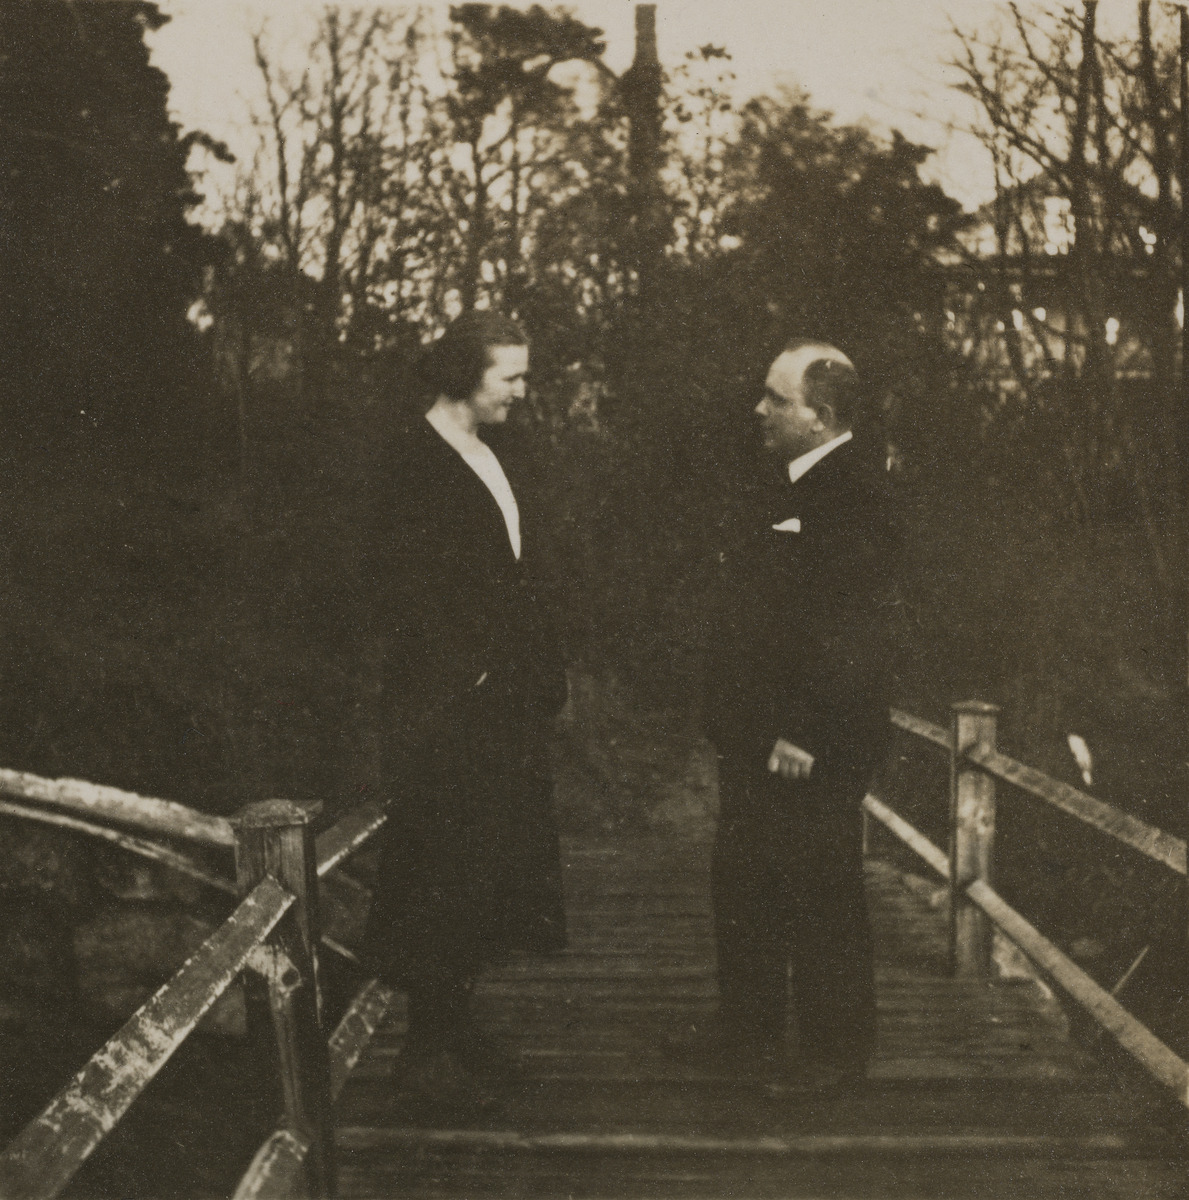 Keraamikko Friedl Holzer-Kjellberg (1905-1993) ja vanhempi mies seisomassa laiturilla